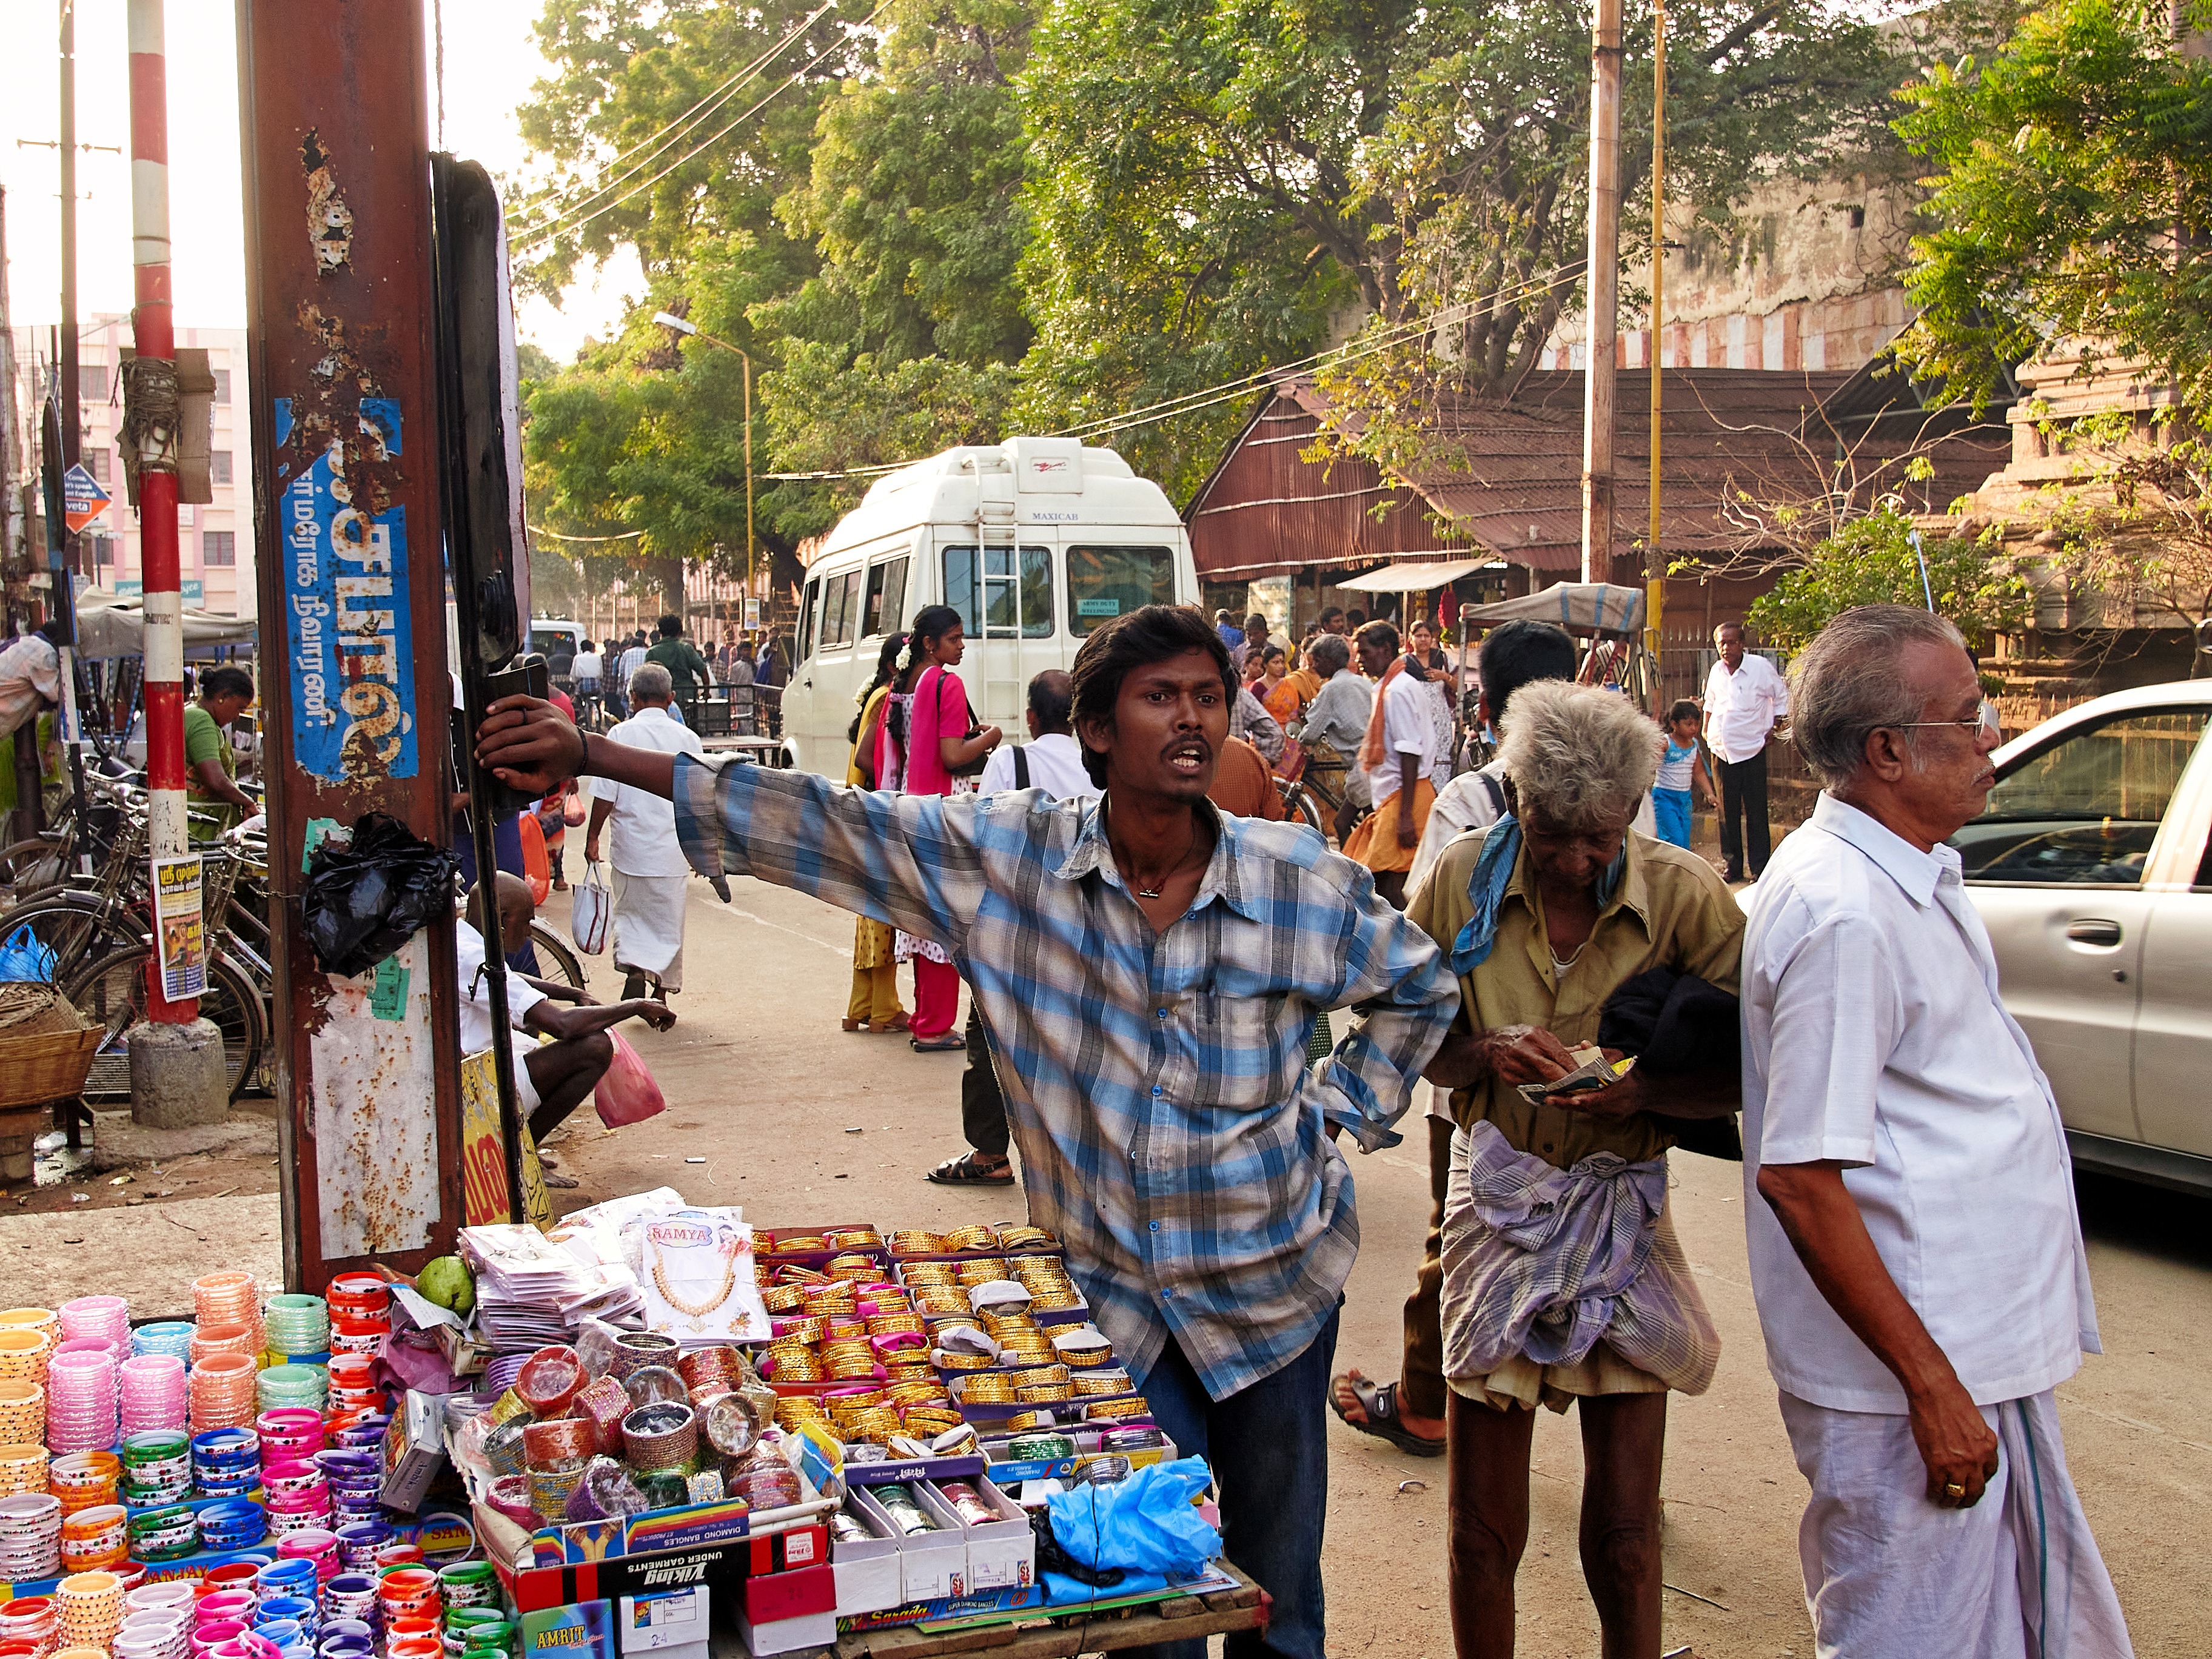 A street vendor selling bangles by the street, Madurai, Tamil Nadu, India